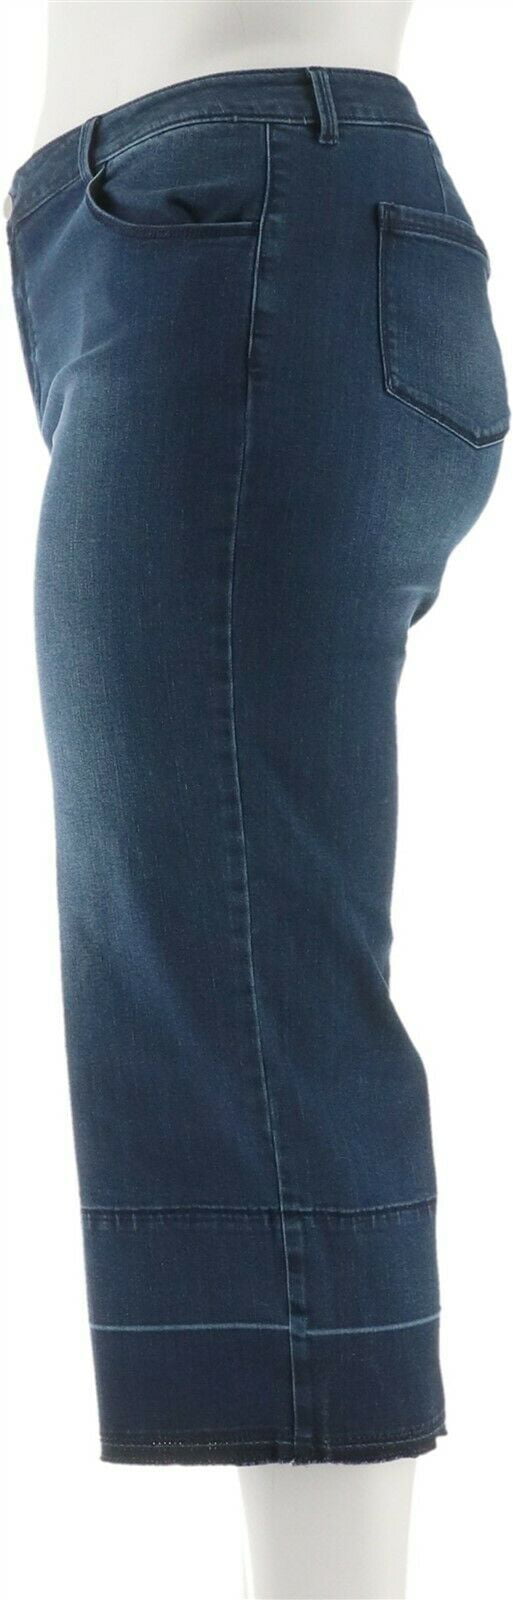 Susan Graver High Stretch Denim Crop Jeans Antique Wash 14 NEW A304089 